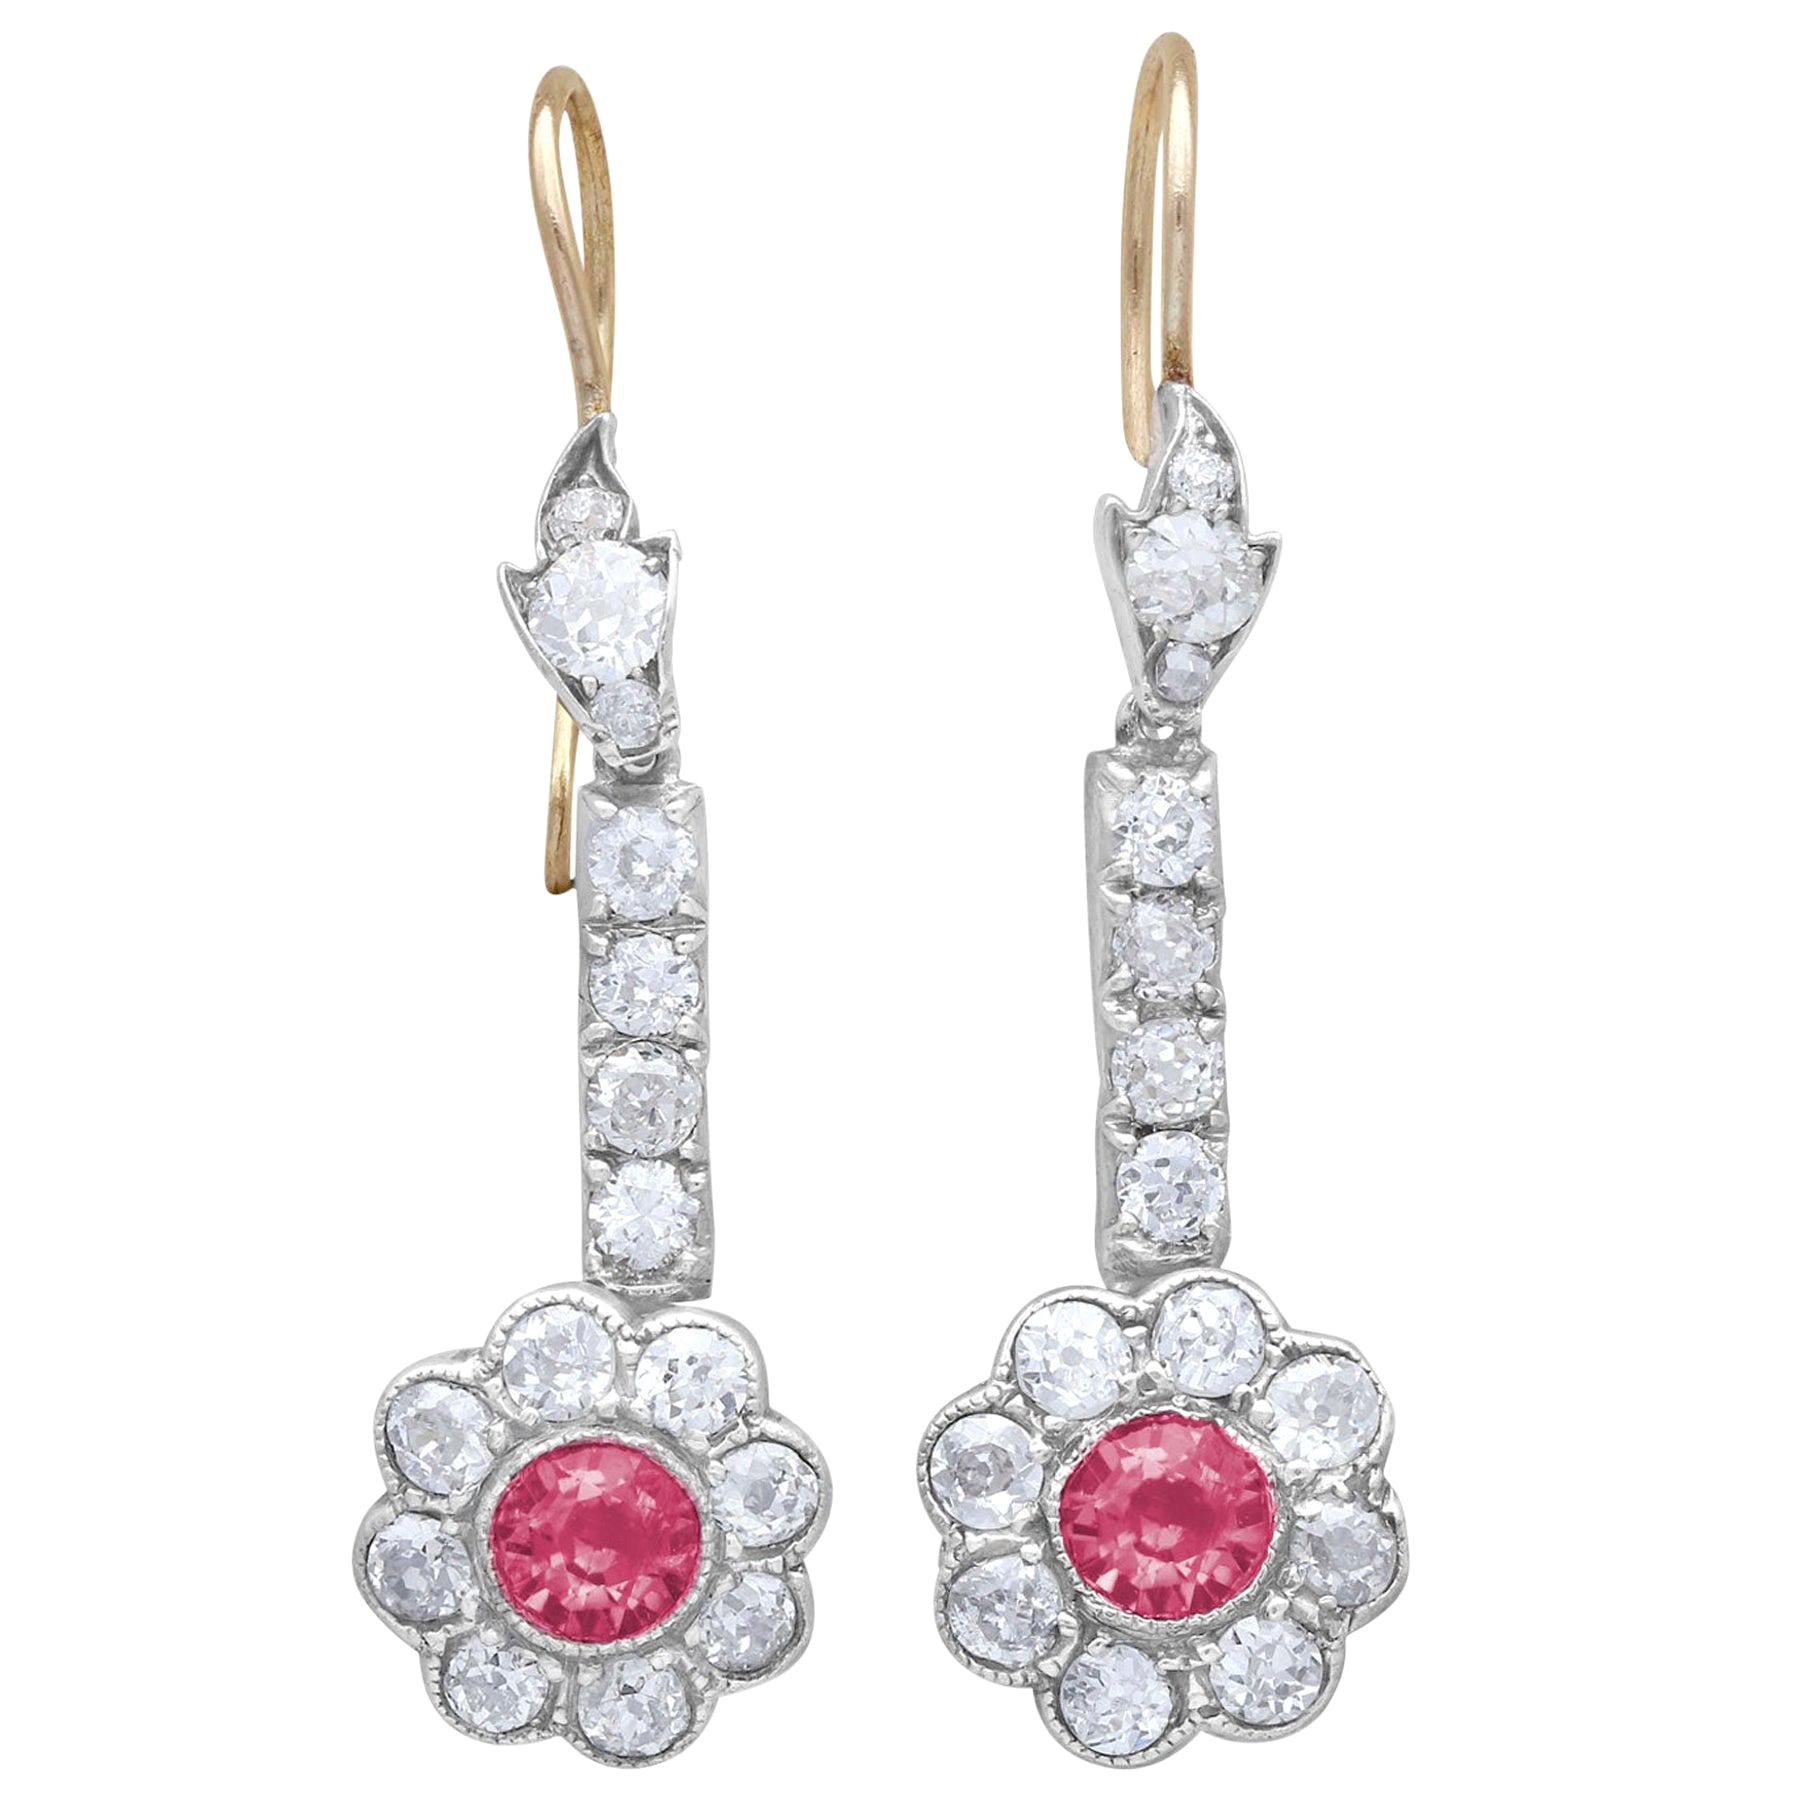 2.42 Carat Diamond and 1.05 Carat Pink Sapphire Drop Earrings